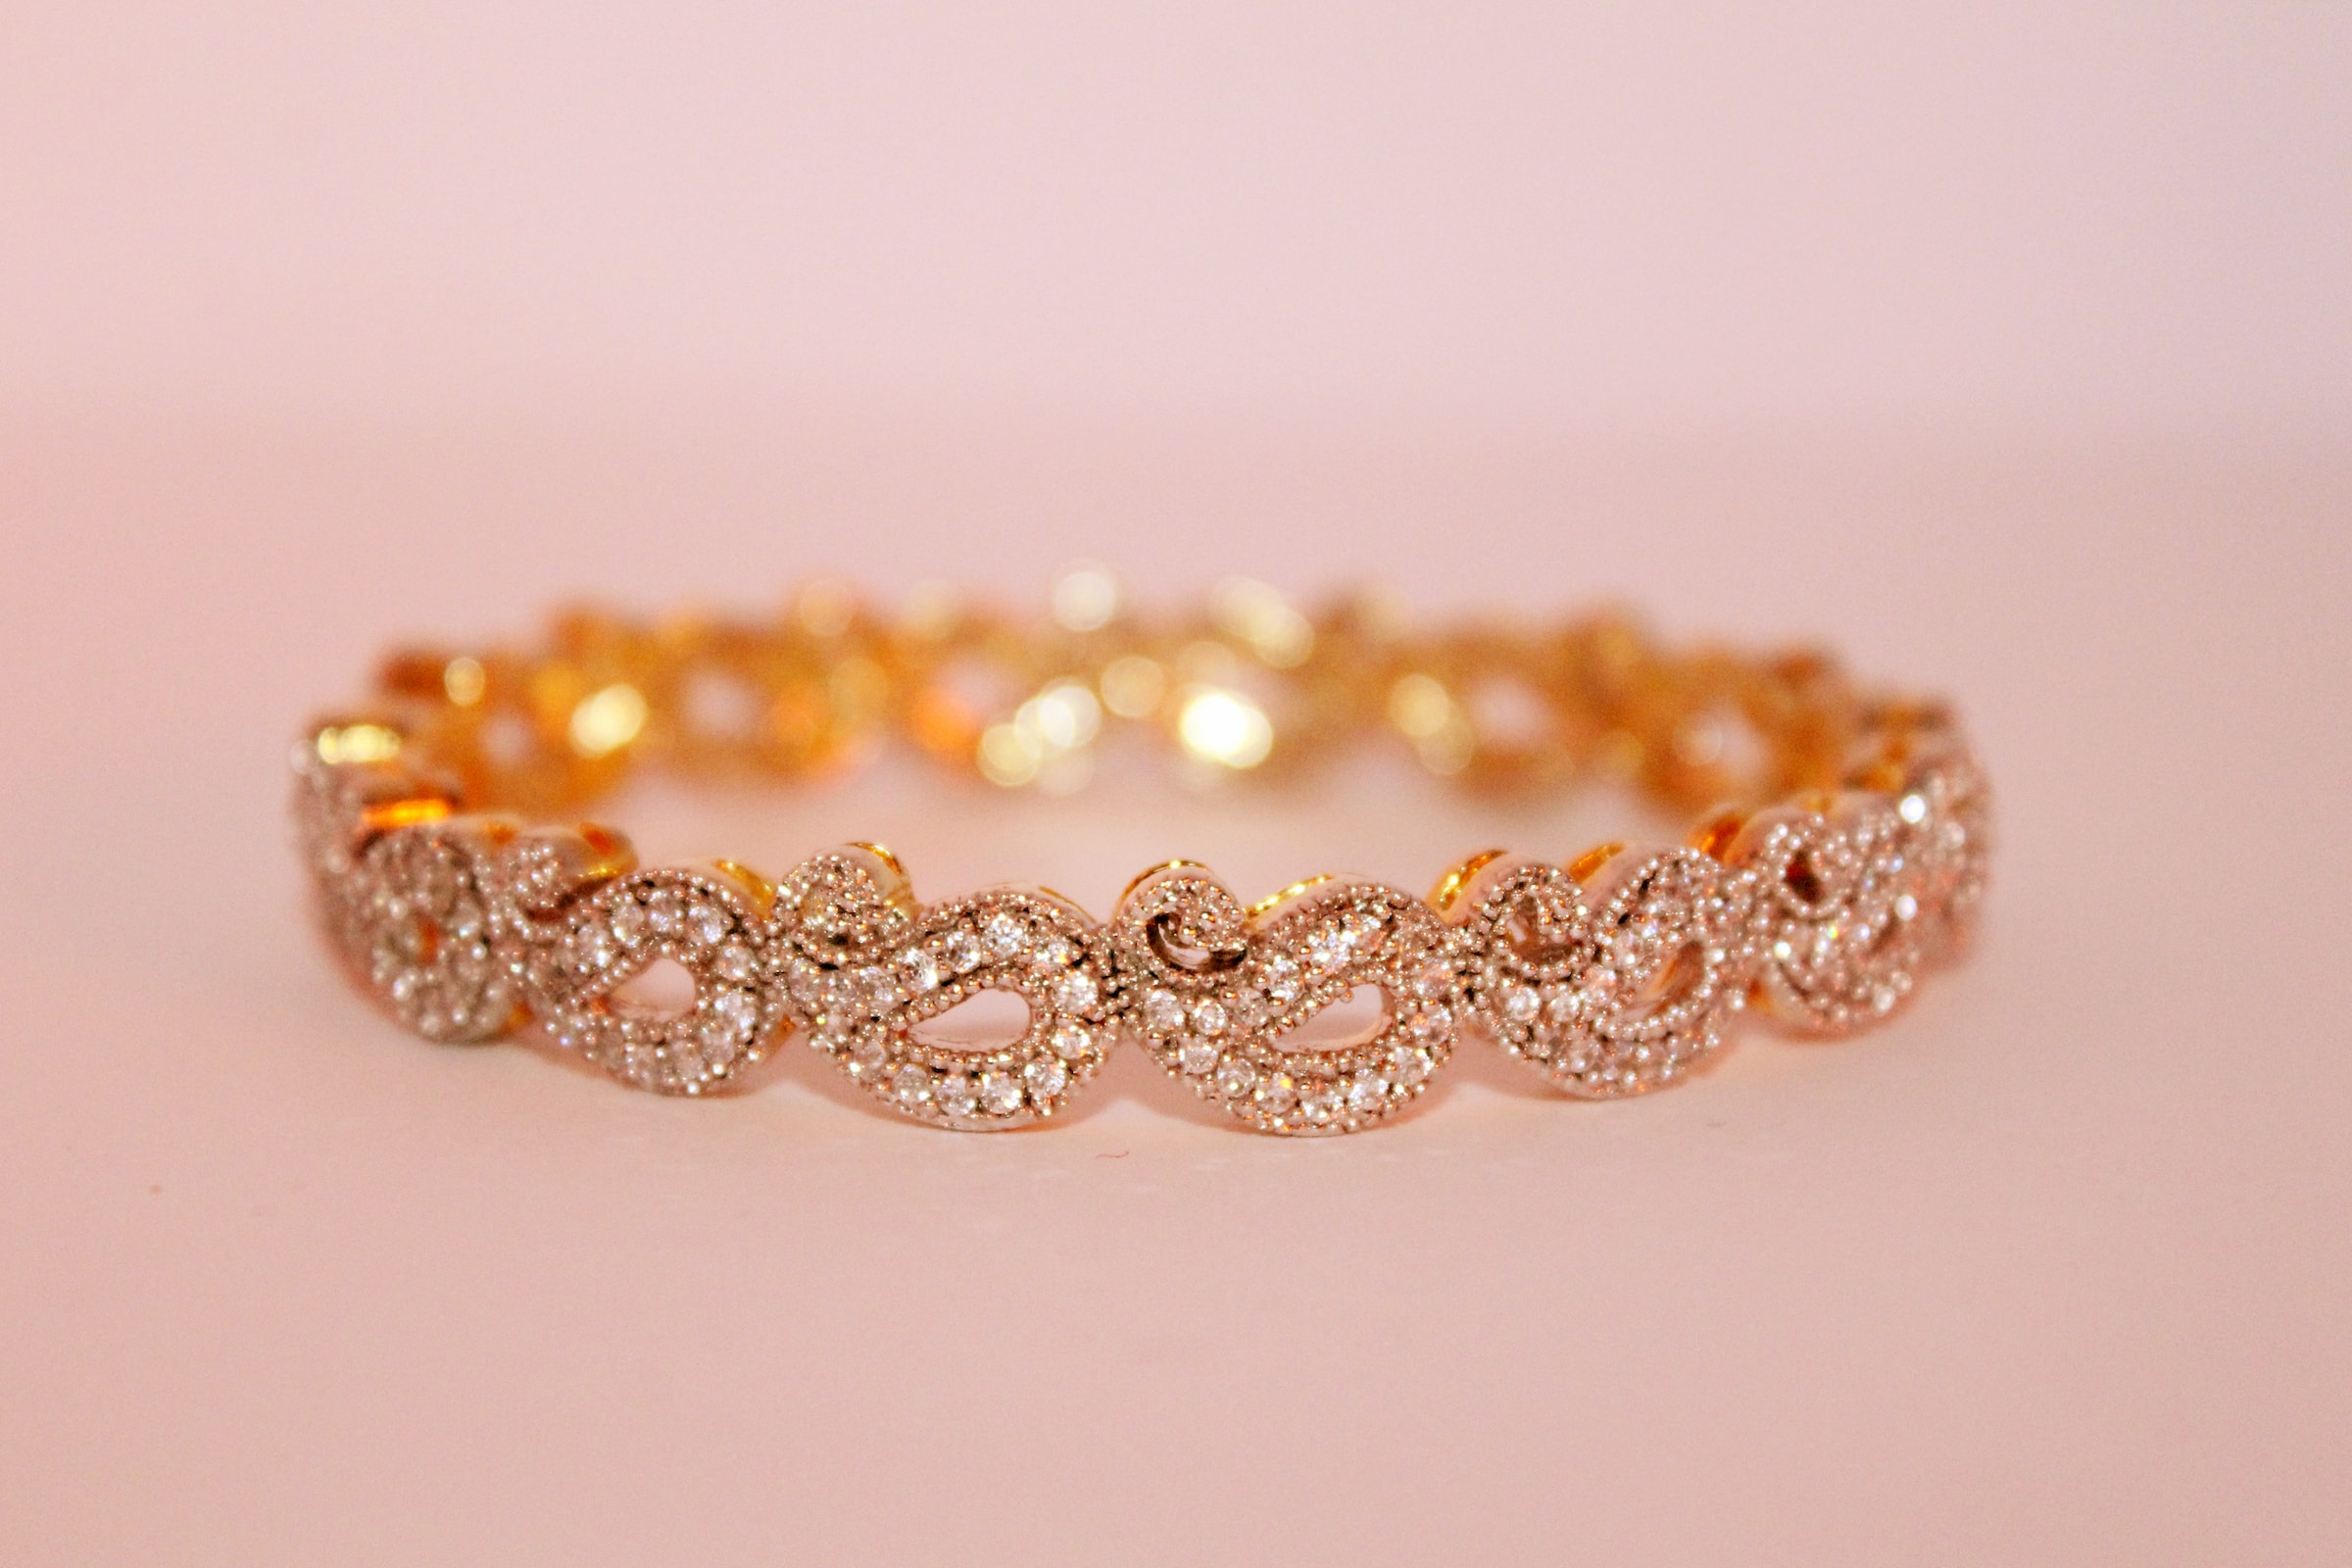 Gold beaded bracelet | Source: Unsplash